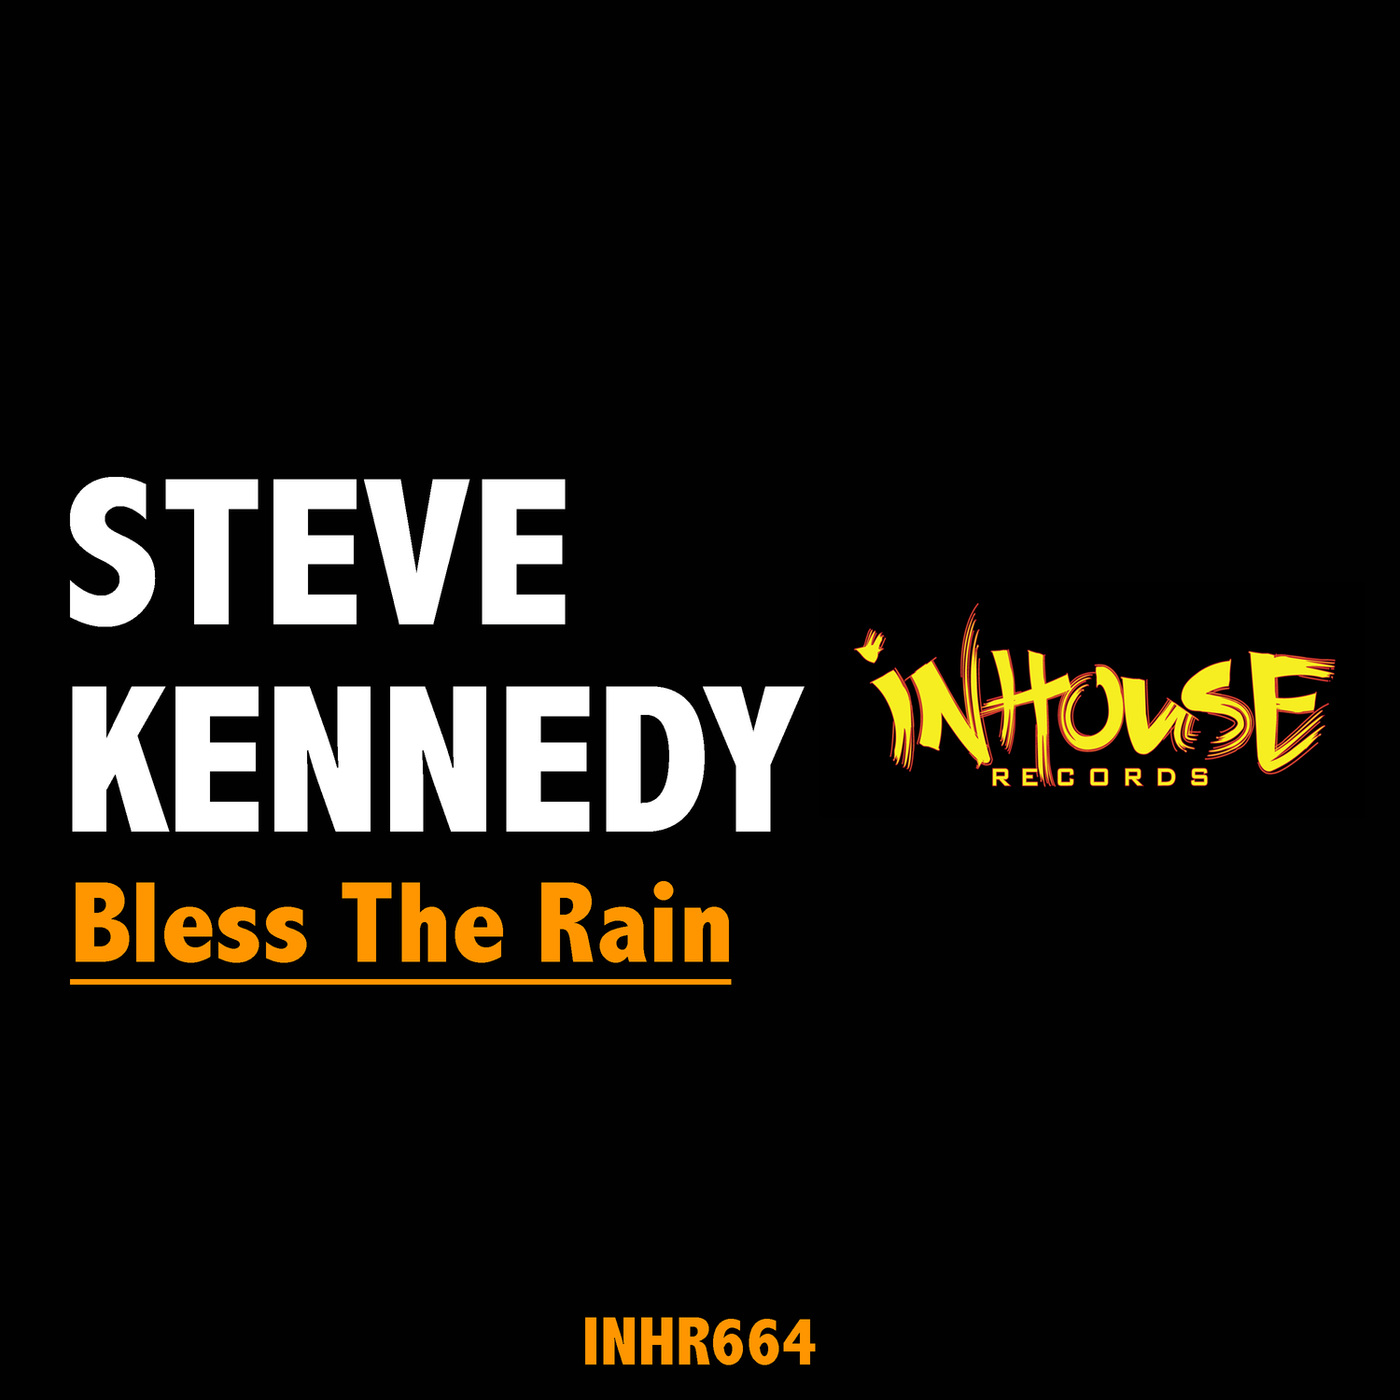 Steve Kennedy - Bless the Rain / InHouse Records